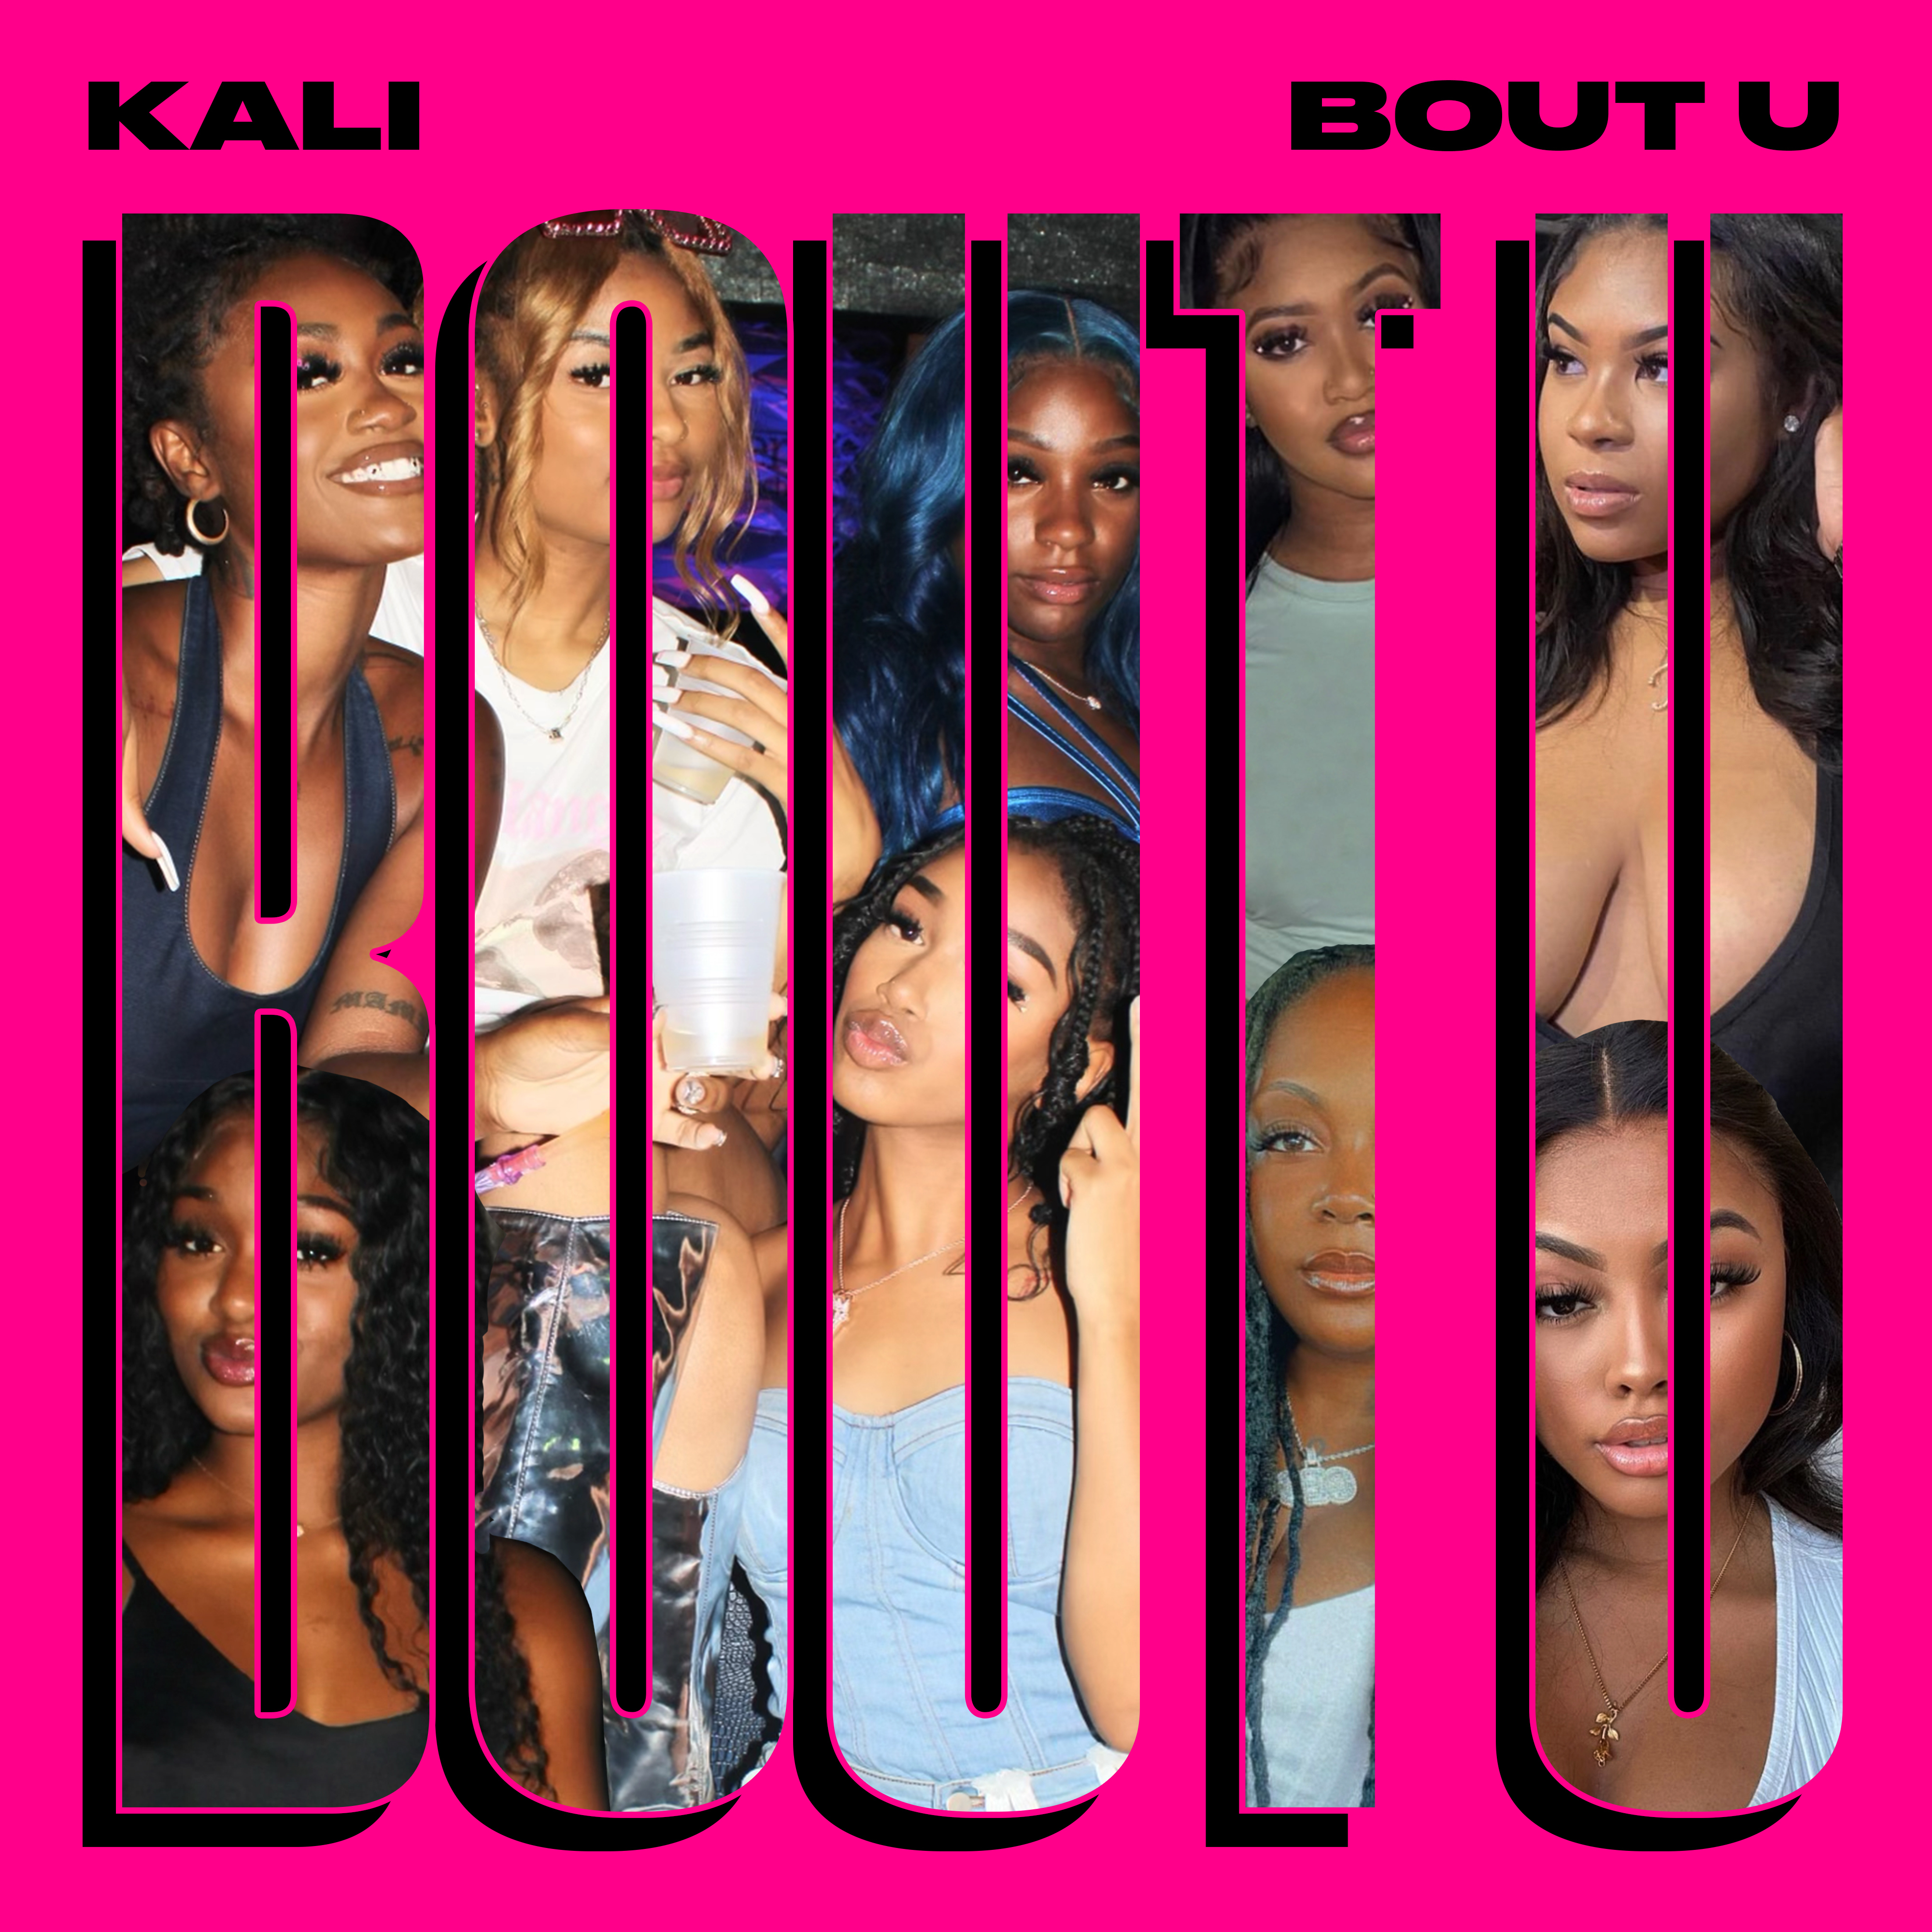 Download Bout U